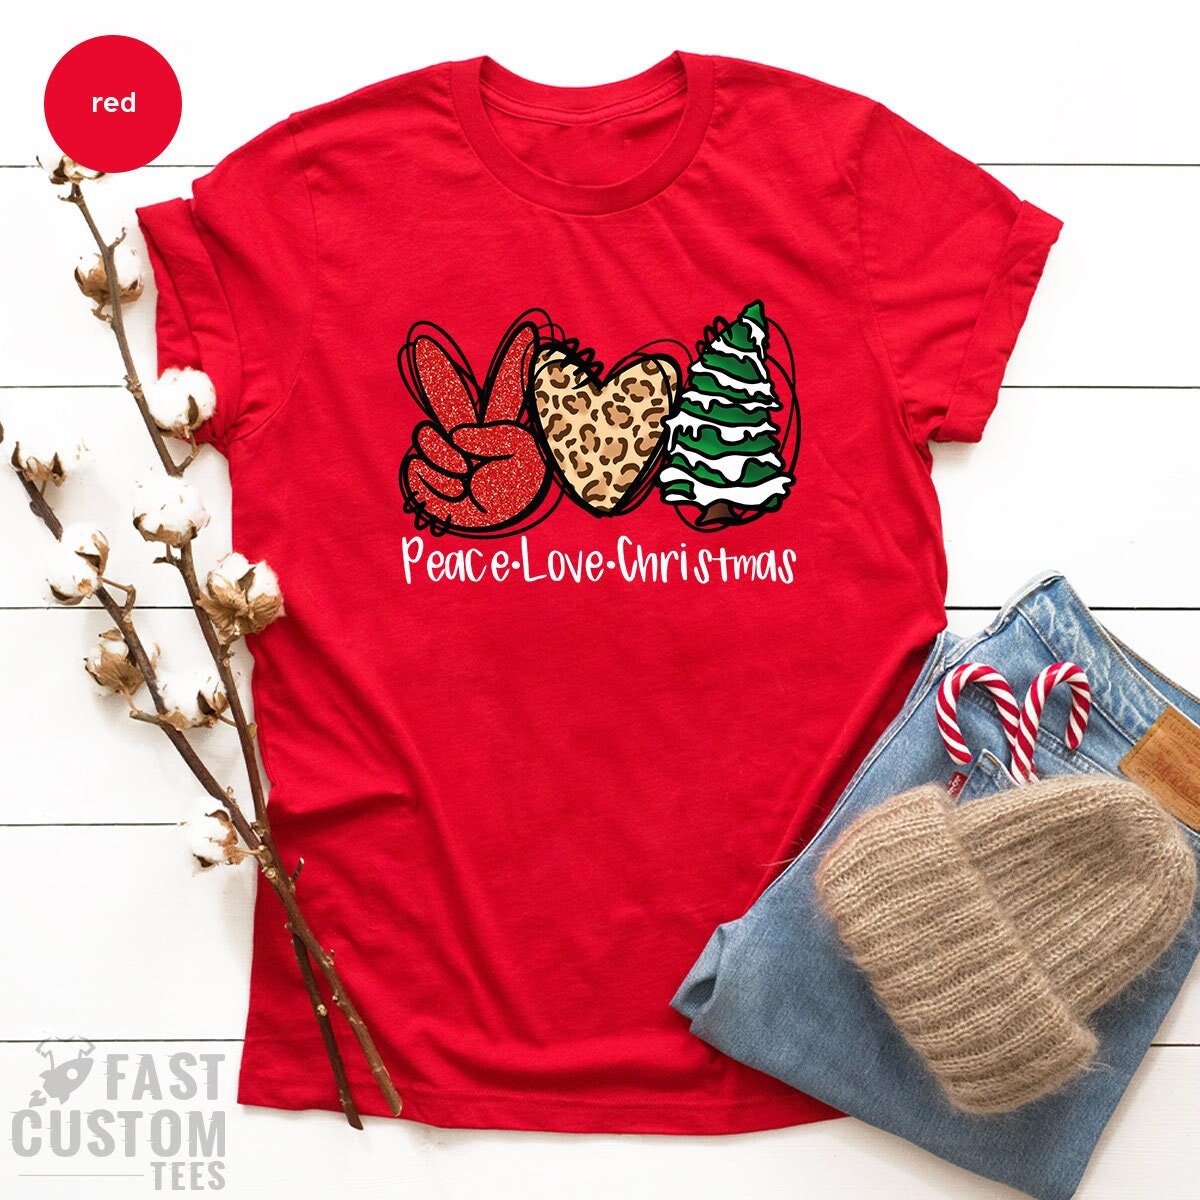 Peace Love Christmas T-Shirt, Merry Noel Shirt, Women Christmas T-shirt, Christmas Gift, Merry Cute Christmas Tee, Family Christmas Shirt - Fastdeliverytees.com